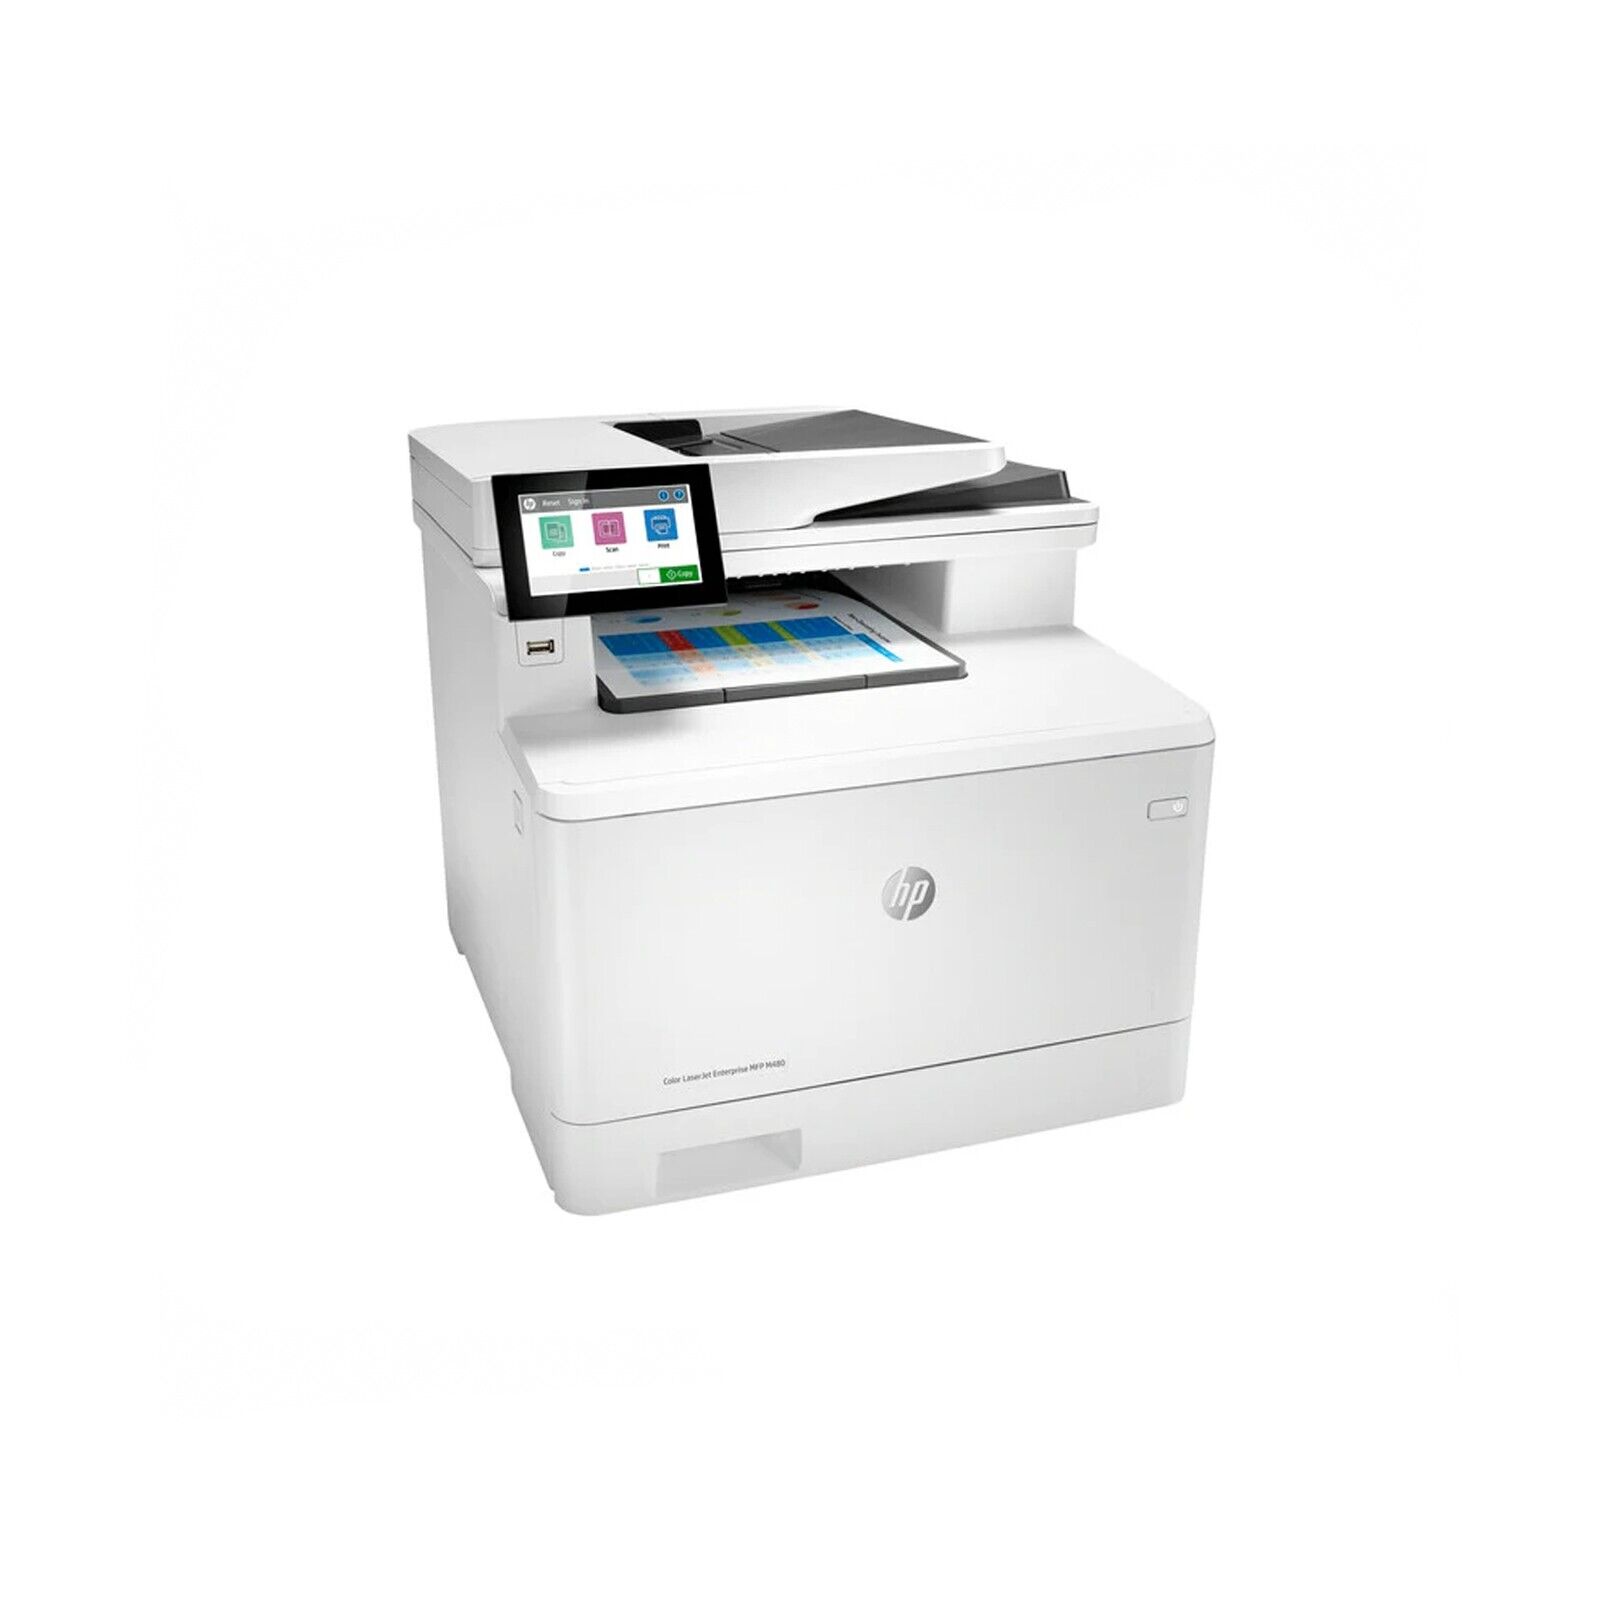 HP Color LaserJet Enterprise MFP M480f Laser Printer - 3QA55A - Brand New